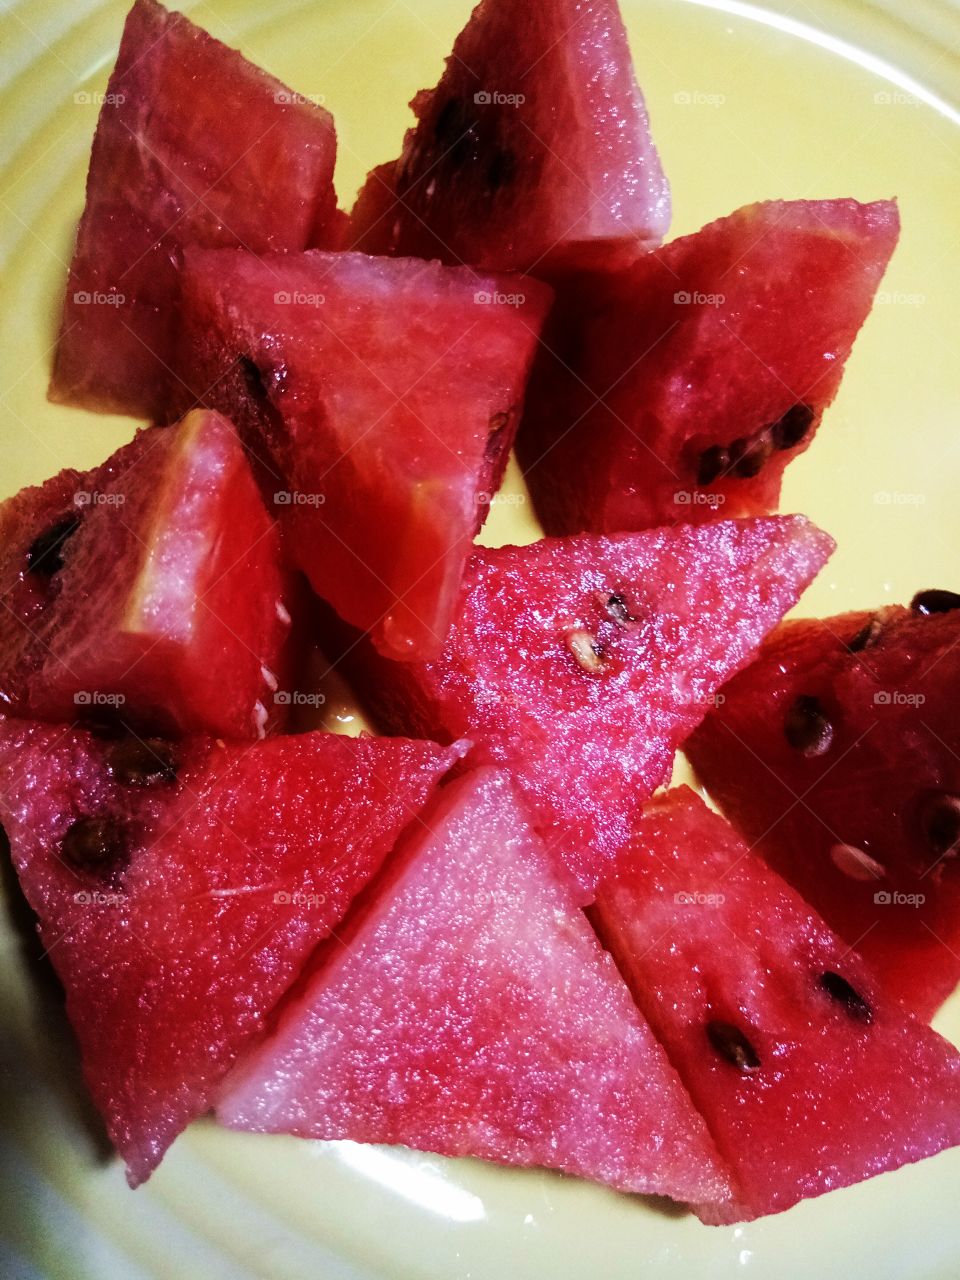 watermelon
fruit
sweet
delicious
good